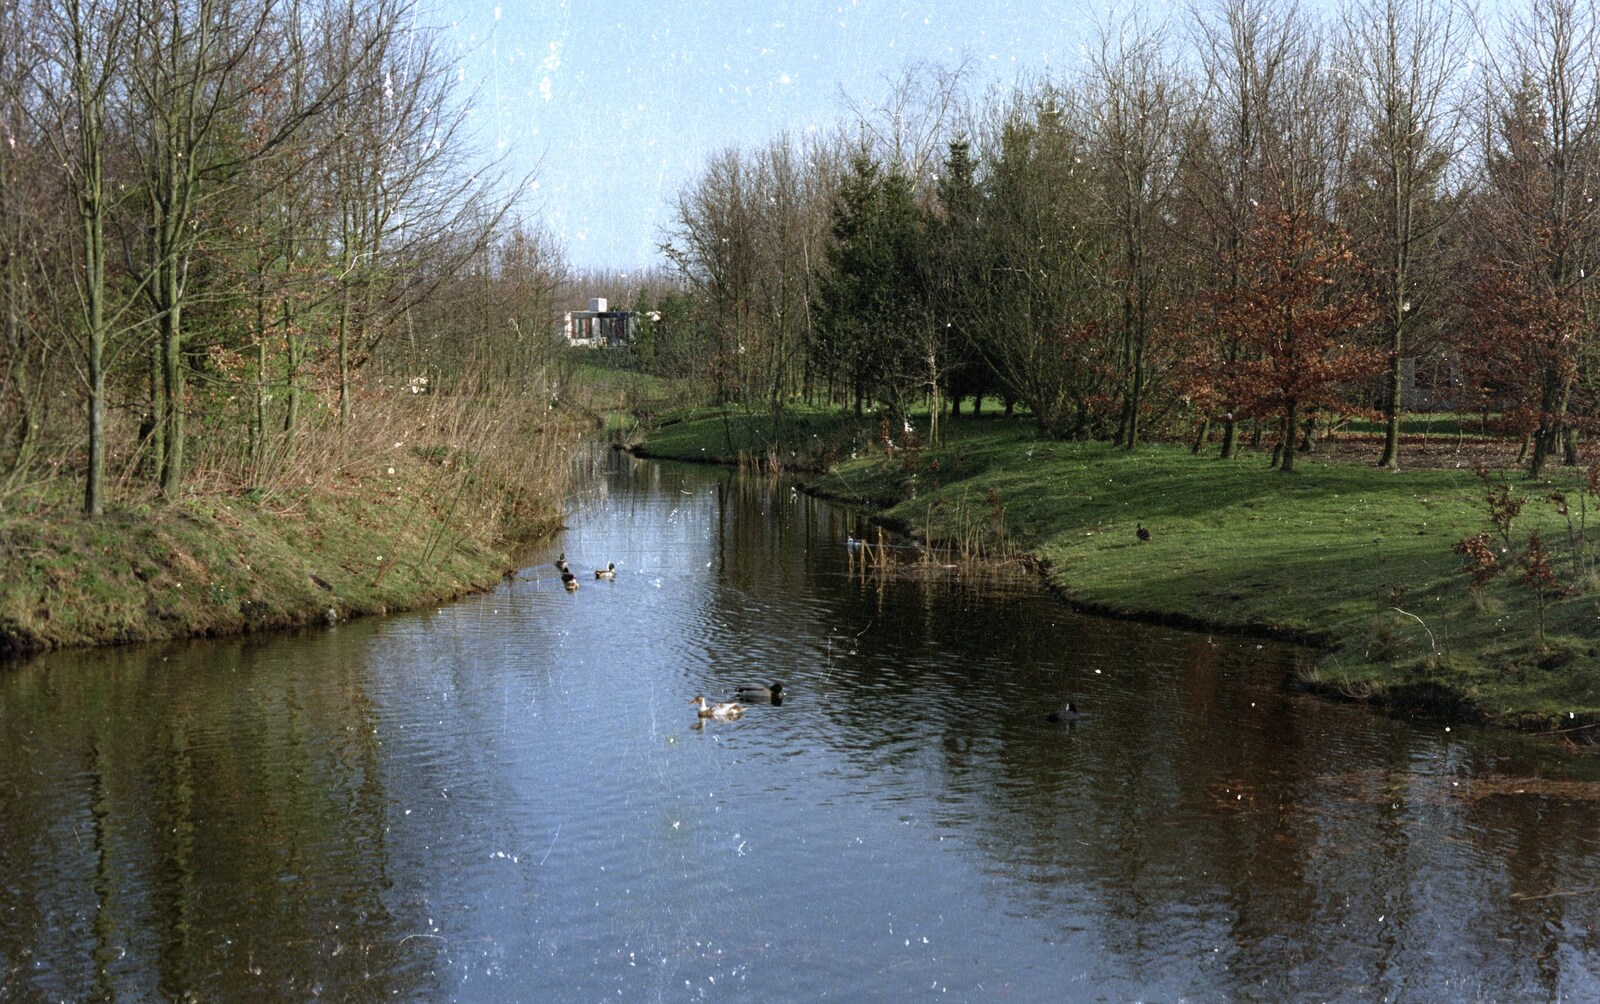 A Trip to Center Parcs, Eemhof, Netherlands - 24th March 1992: Center Parcs' ponds